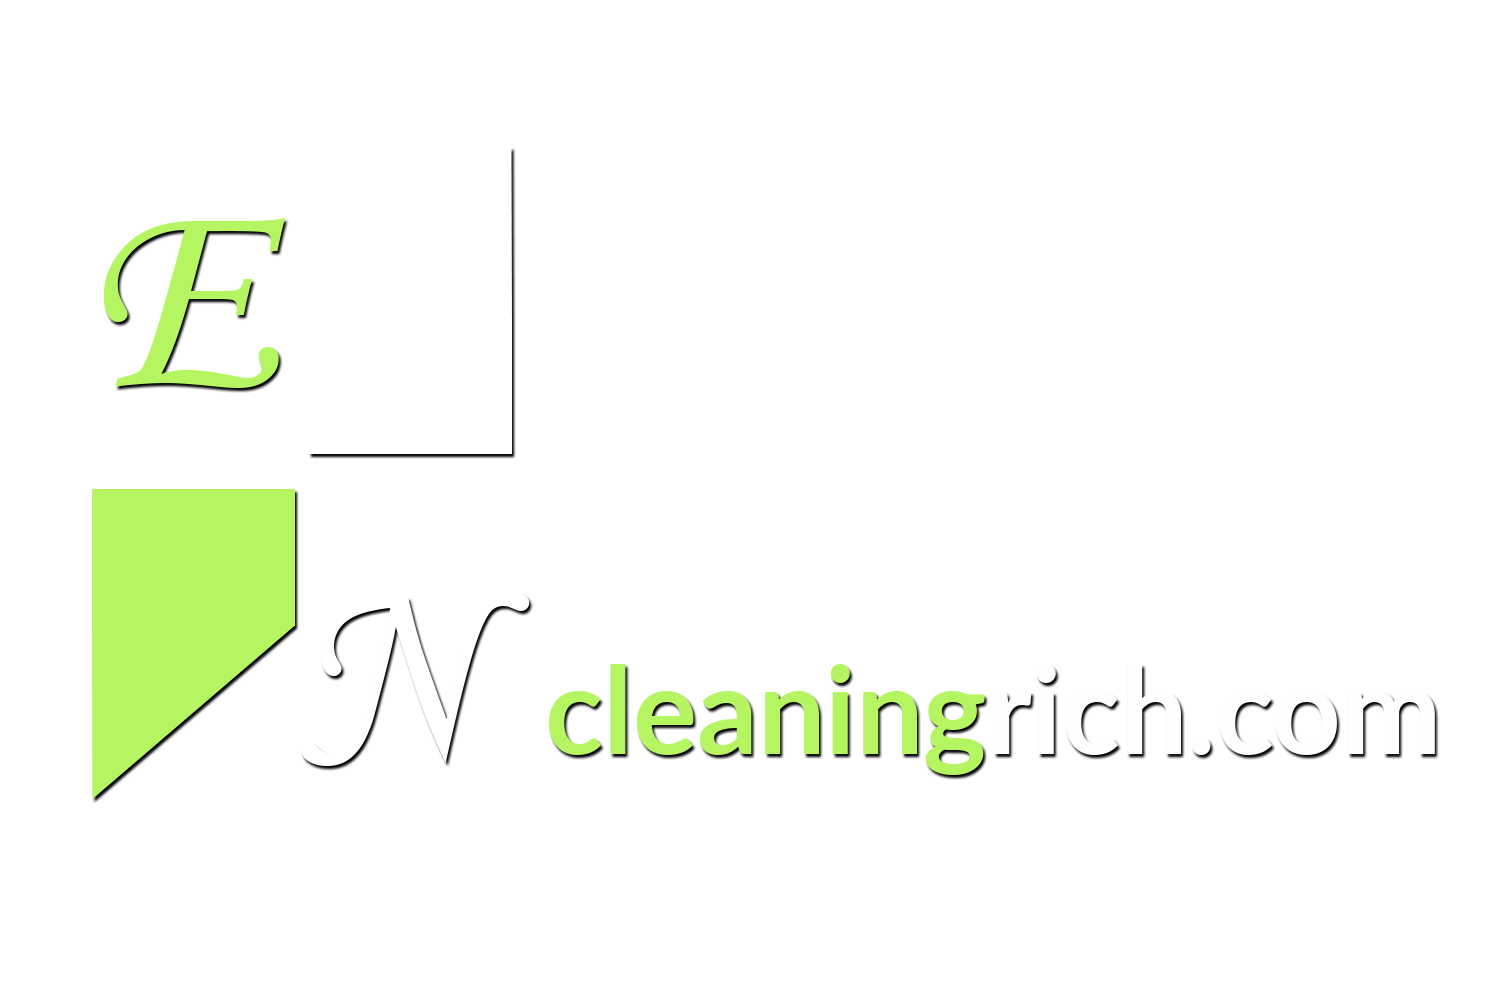 Pengenalan perniagaan cleaning service